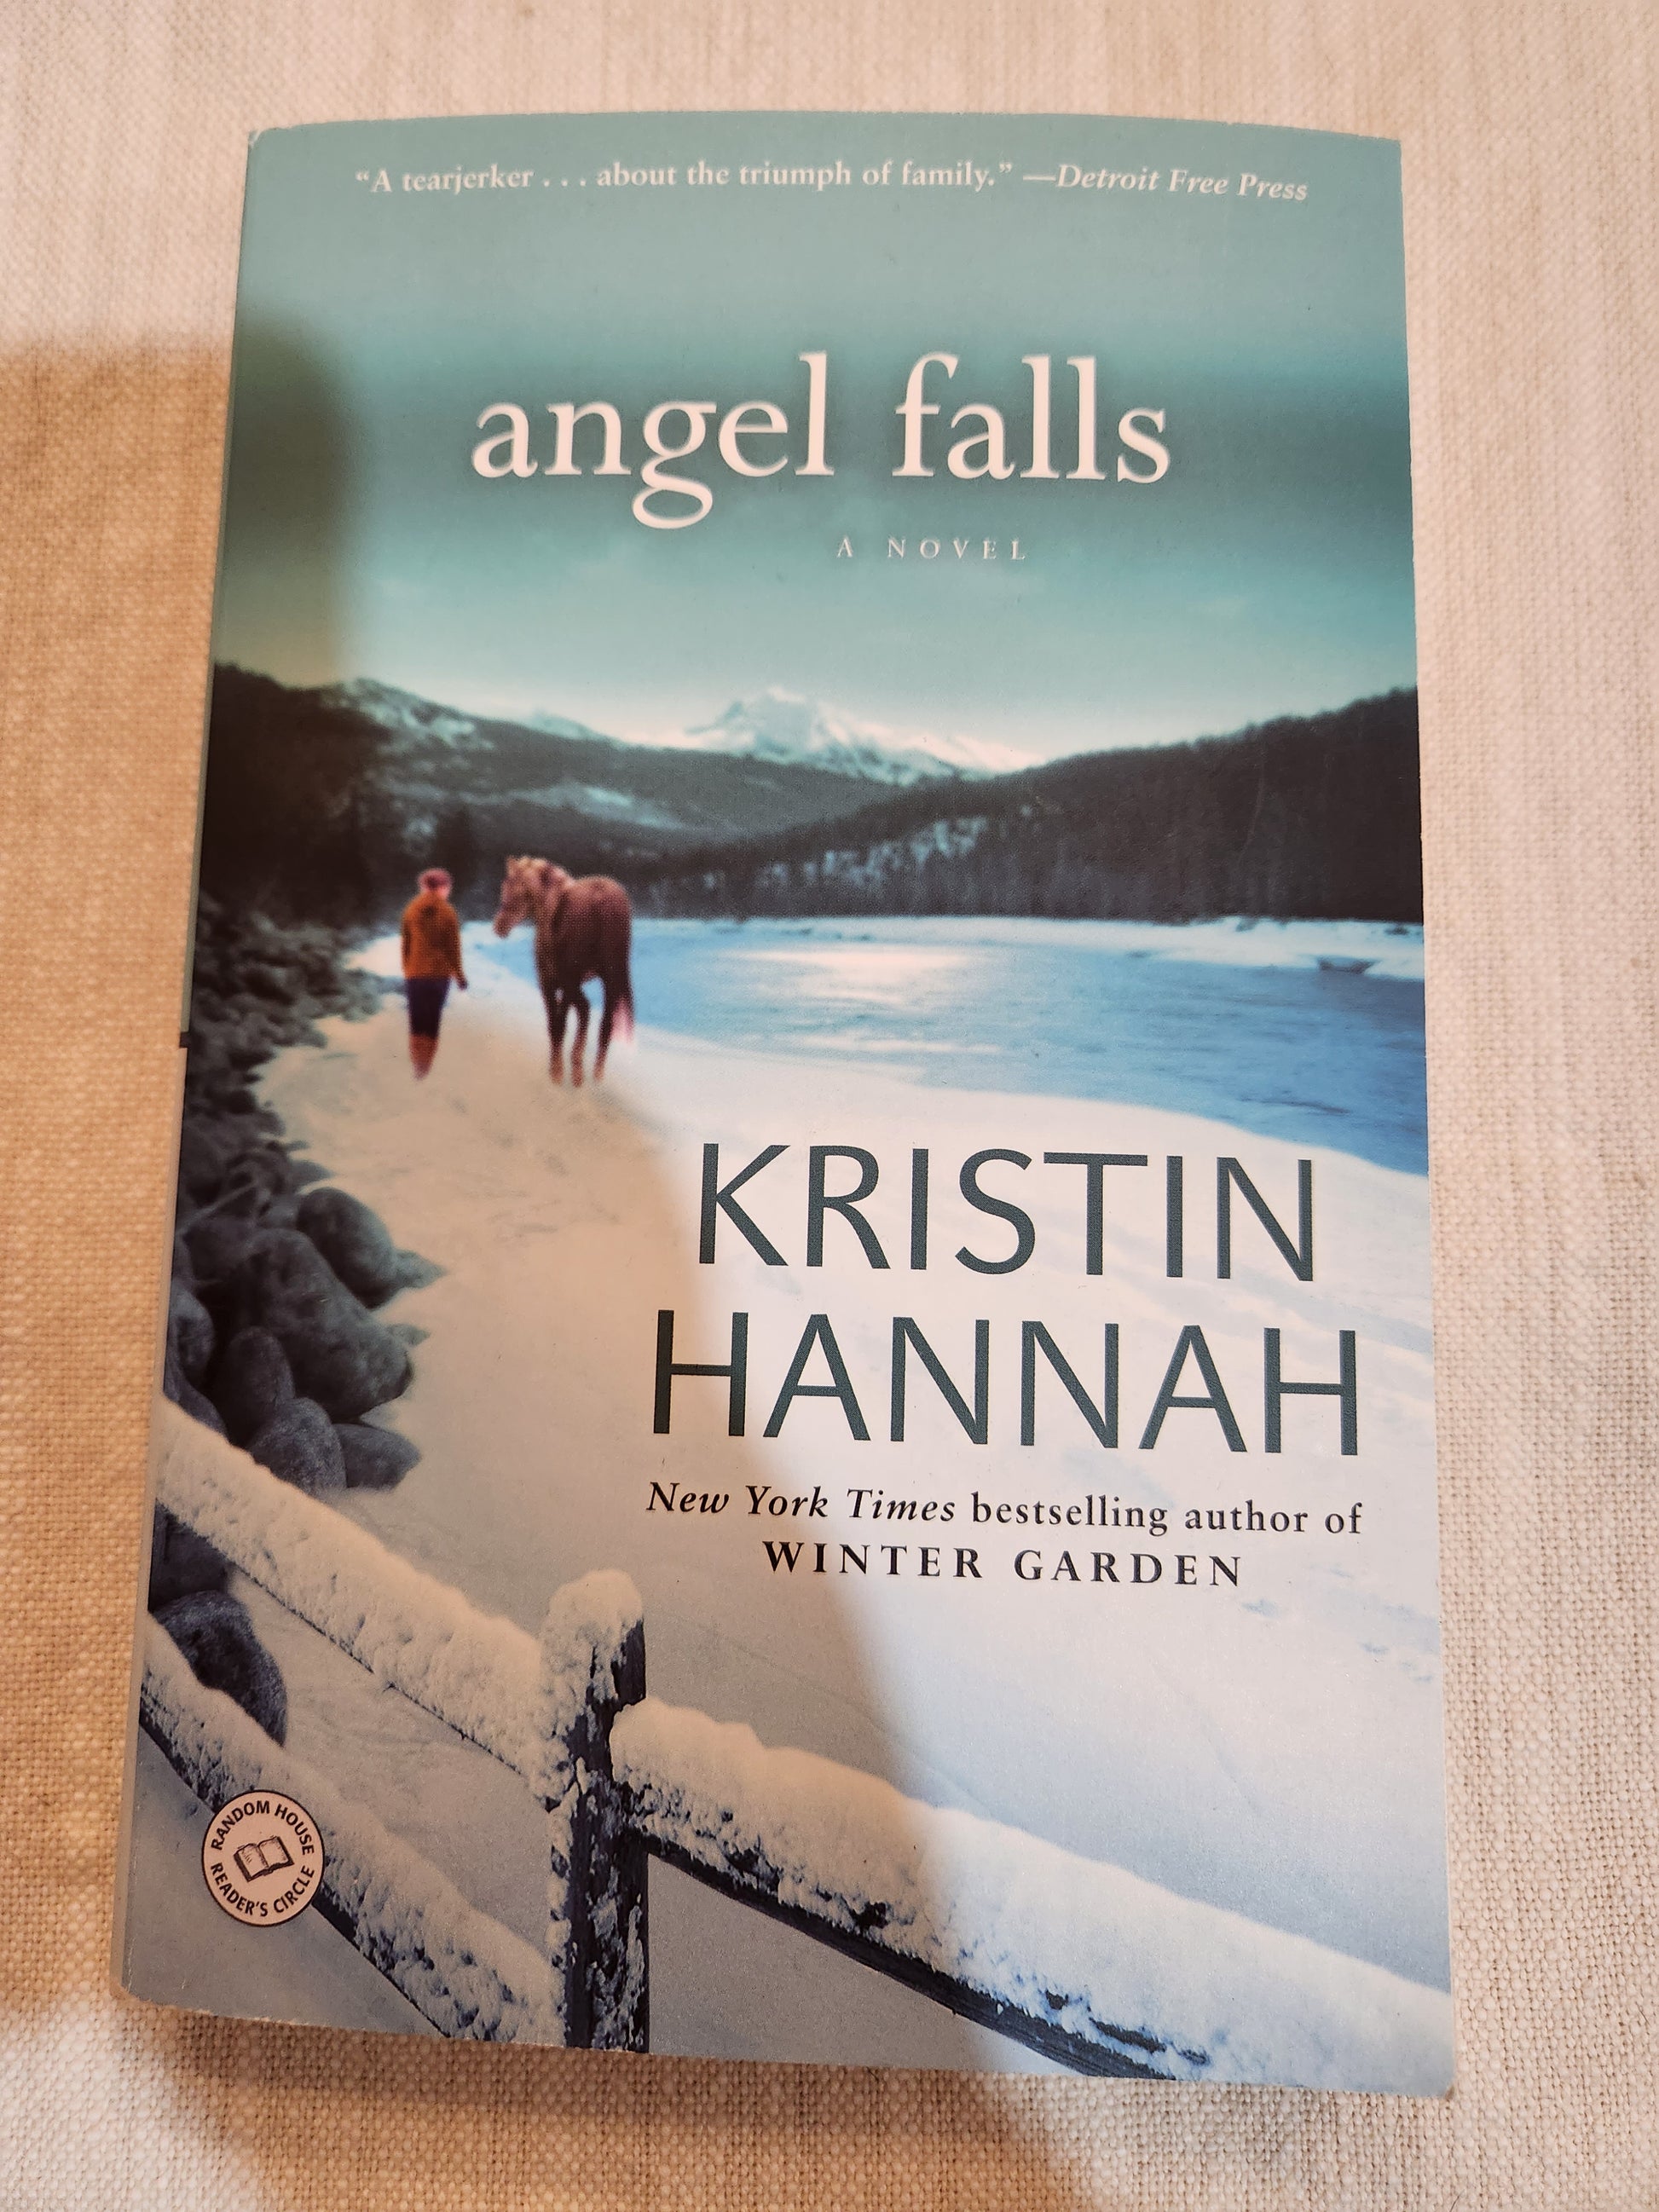 "Angel Falls" by Kristin Hannah - Dead Tree Dreams Bookstore